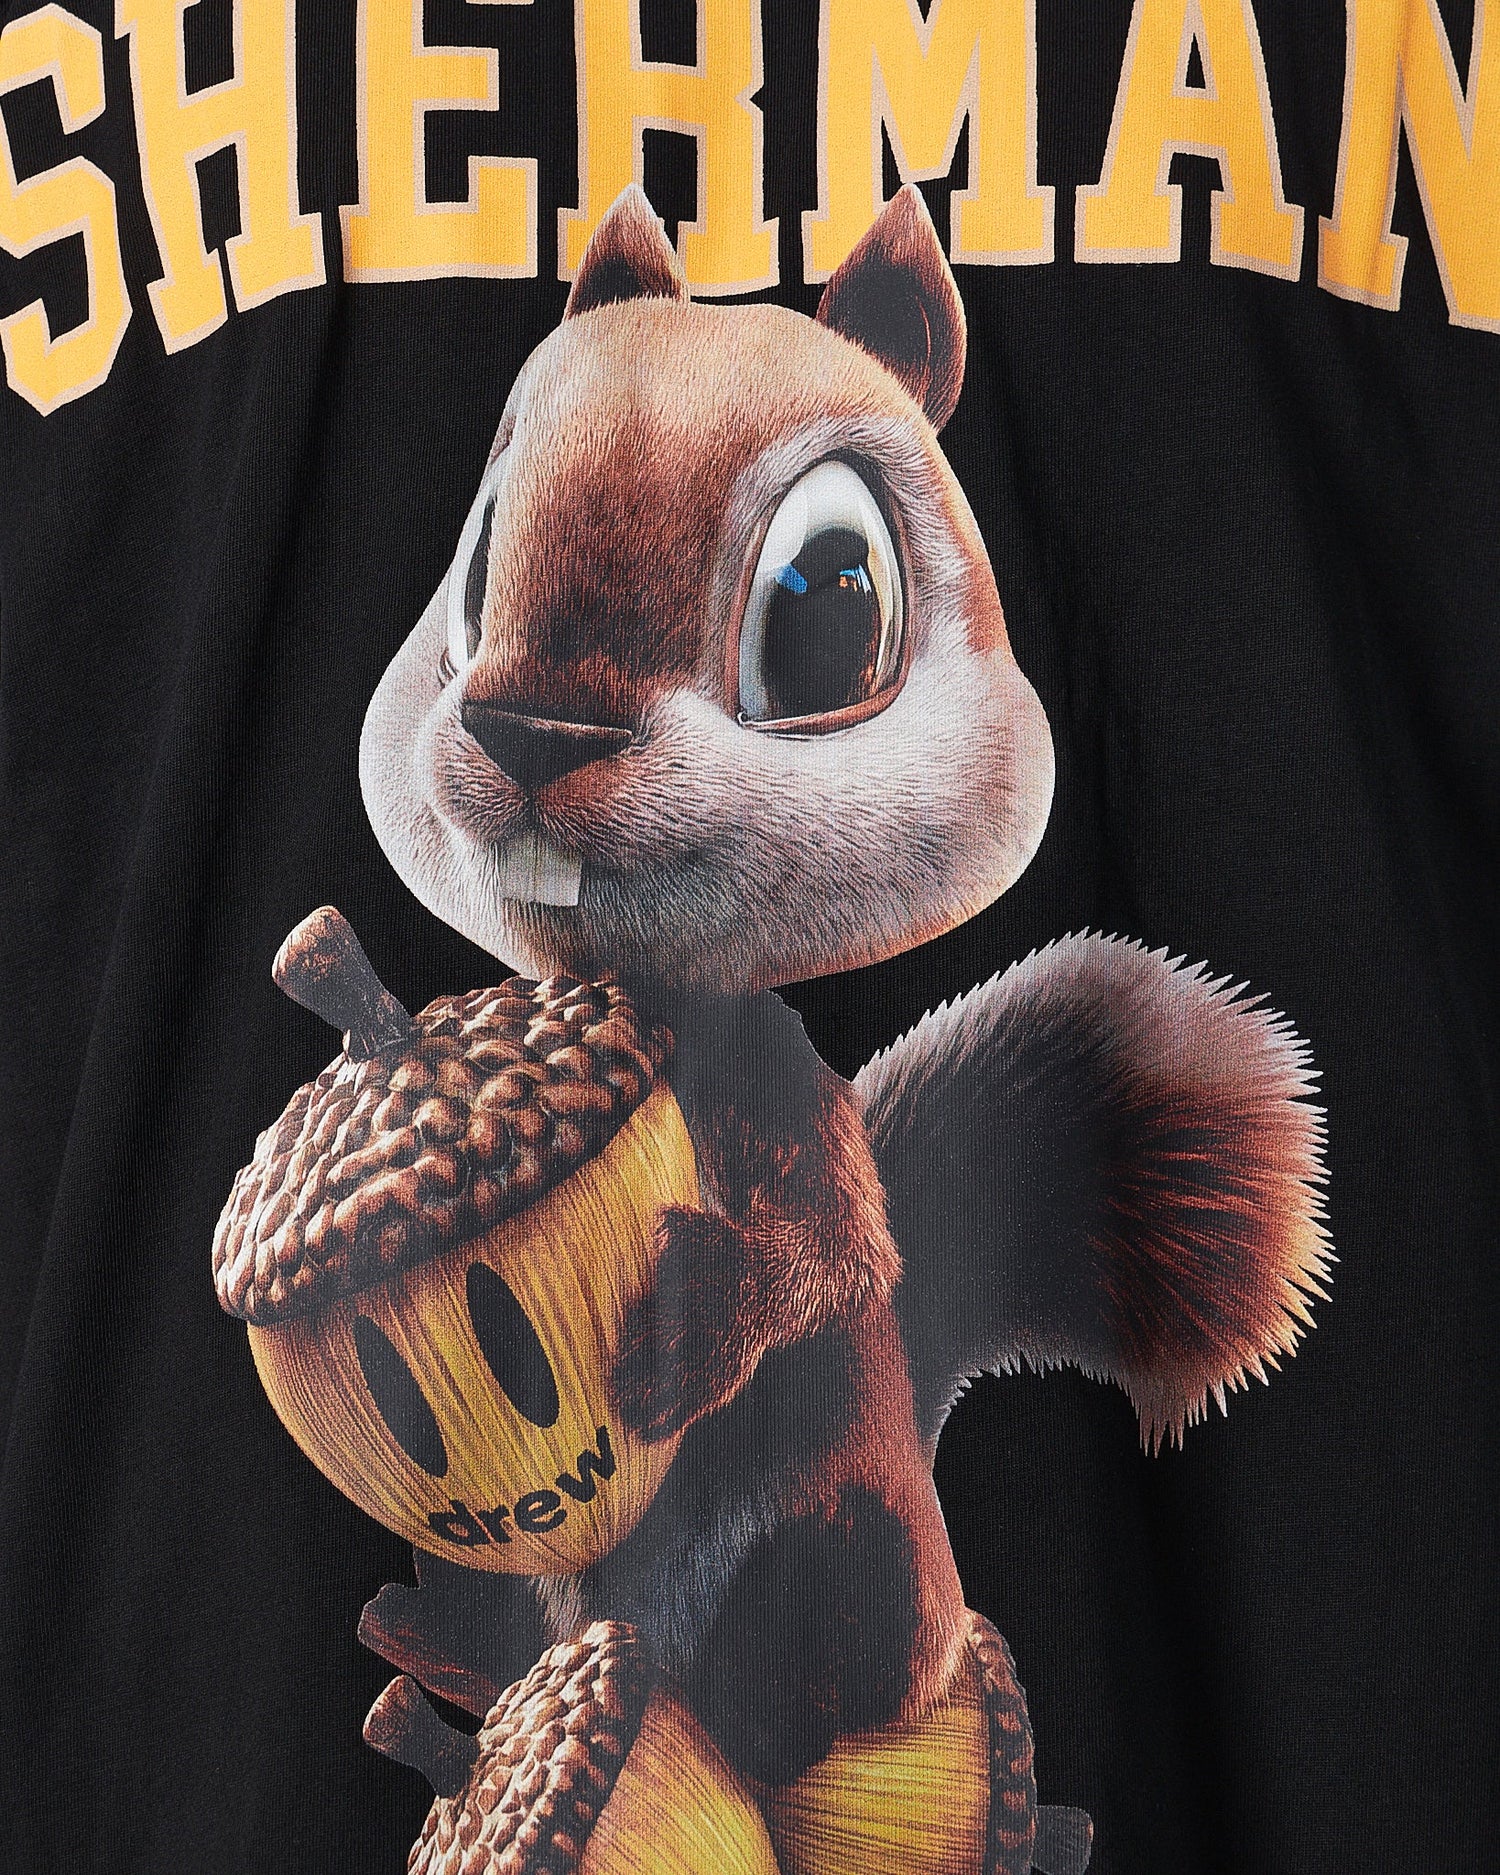 MOI OUTFIT-DRE Squirrel Sherman Unisex Black T-Shirt 22.90